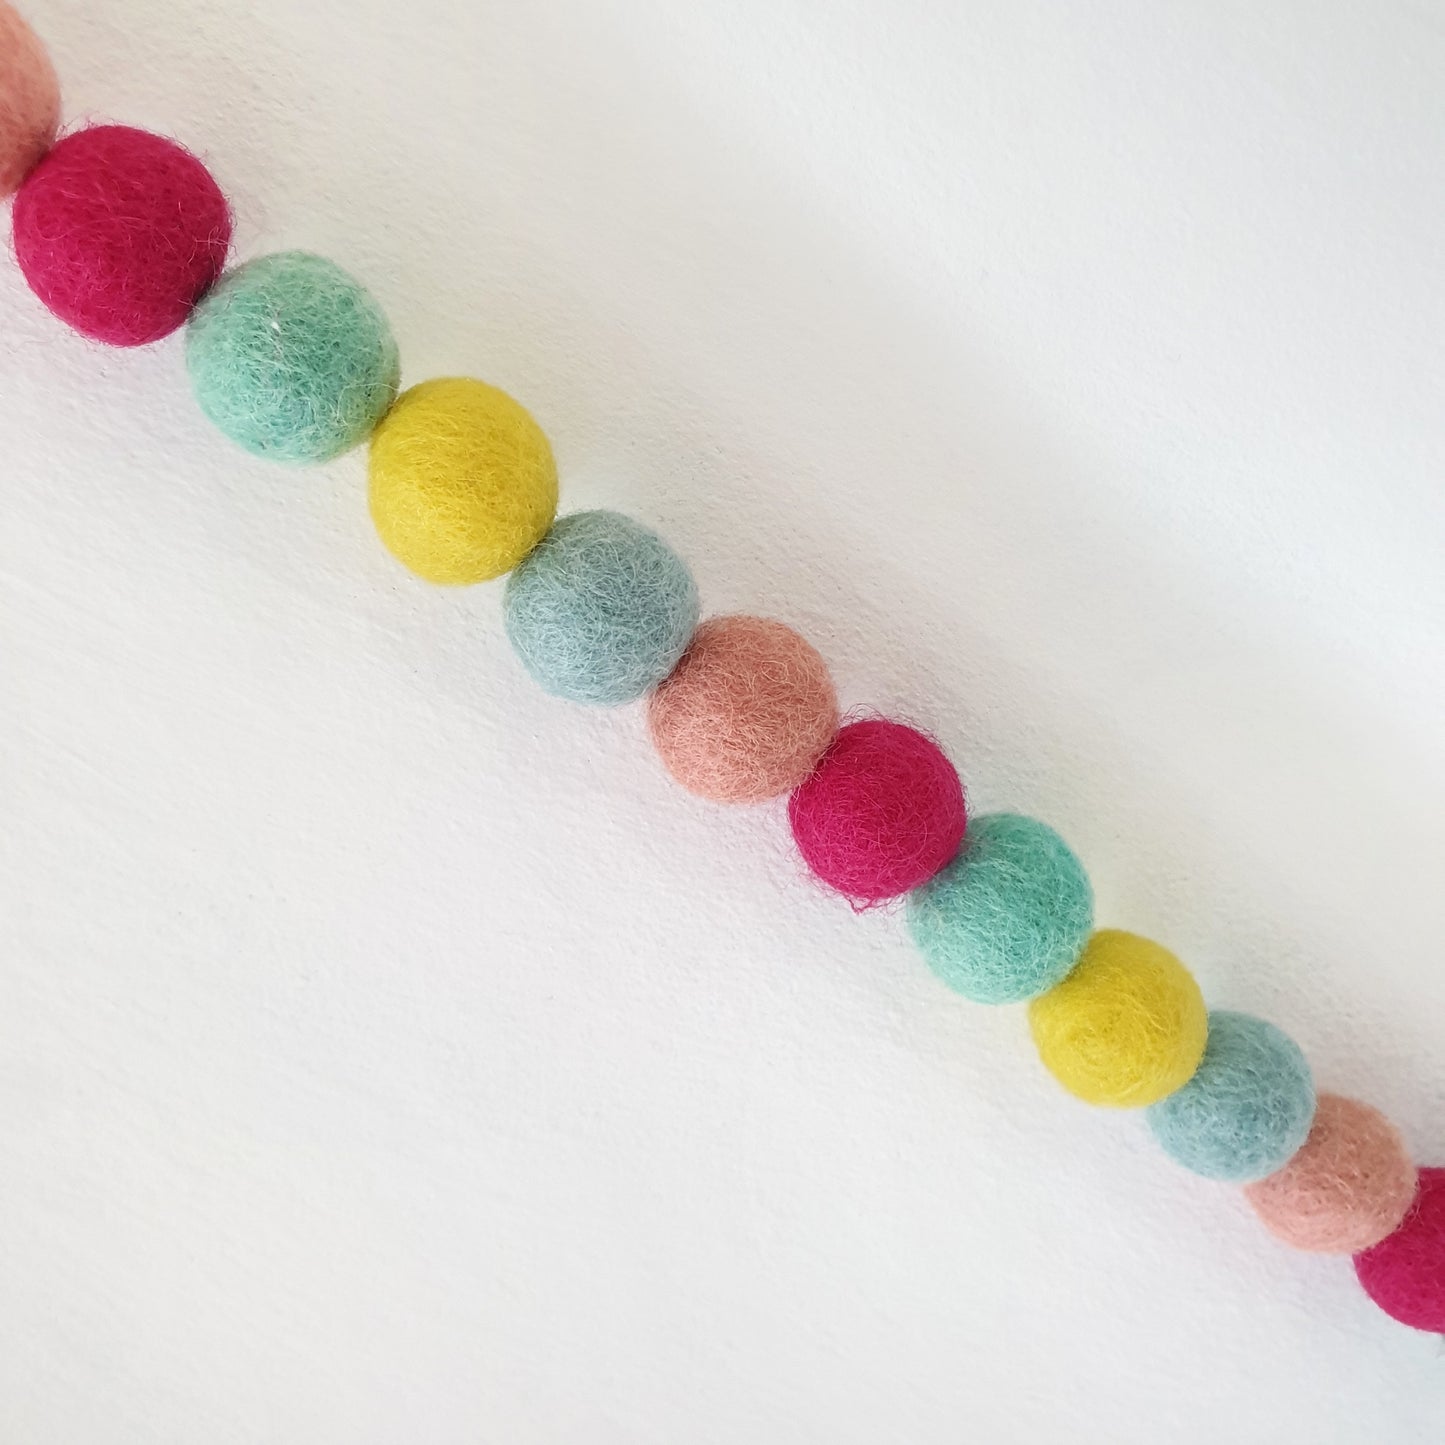 Candy Rainbow Pom Pom Garland - Felt Ball Nursery Decor